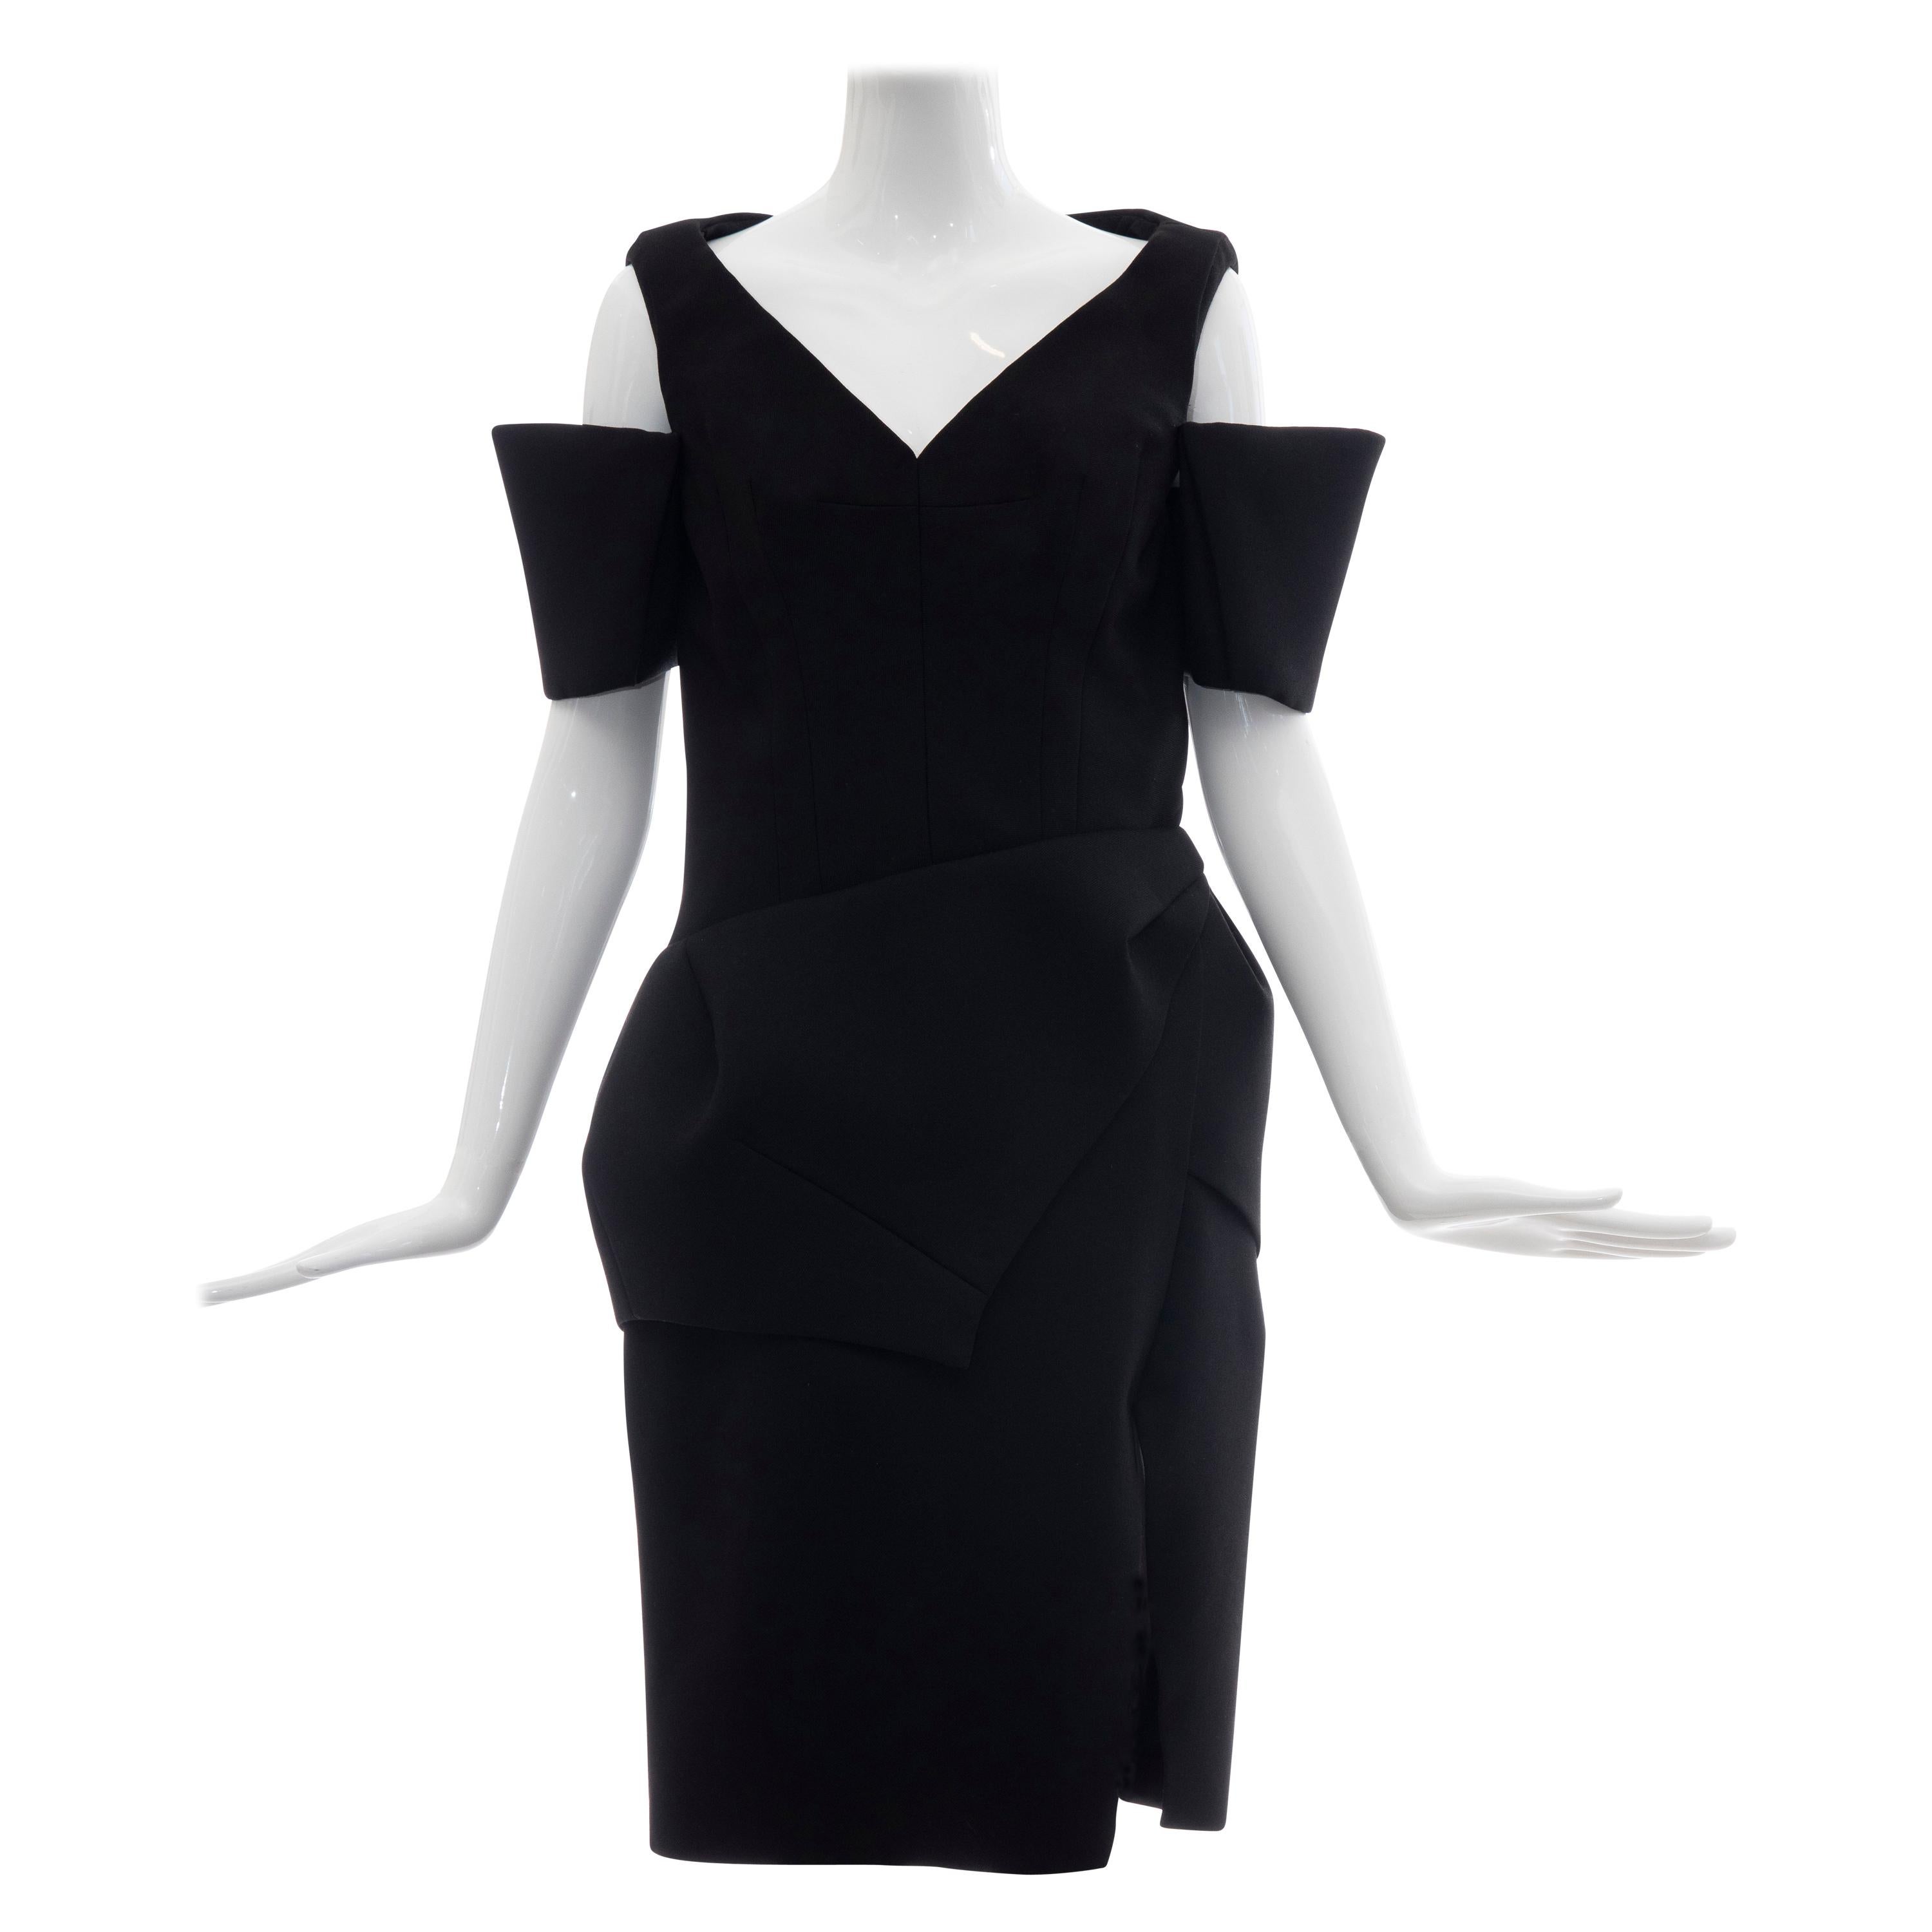 Nicolas Ghesquière for Balenciaga Runway Black Wool Structured Dress, Fall 2008 For Sale